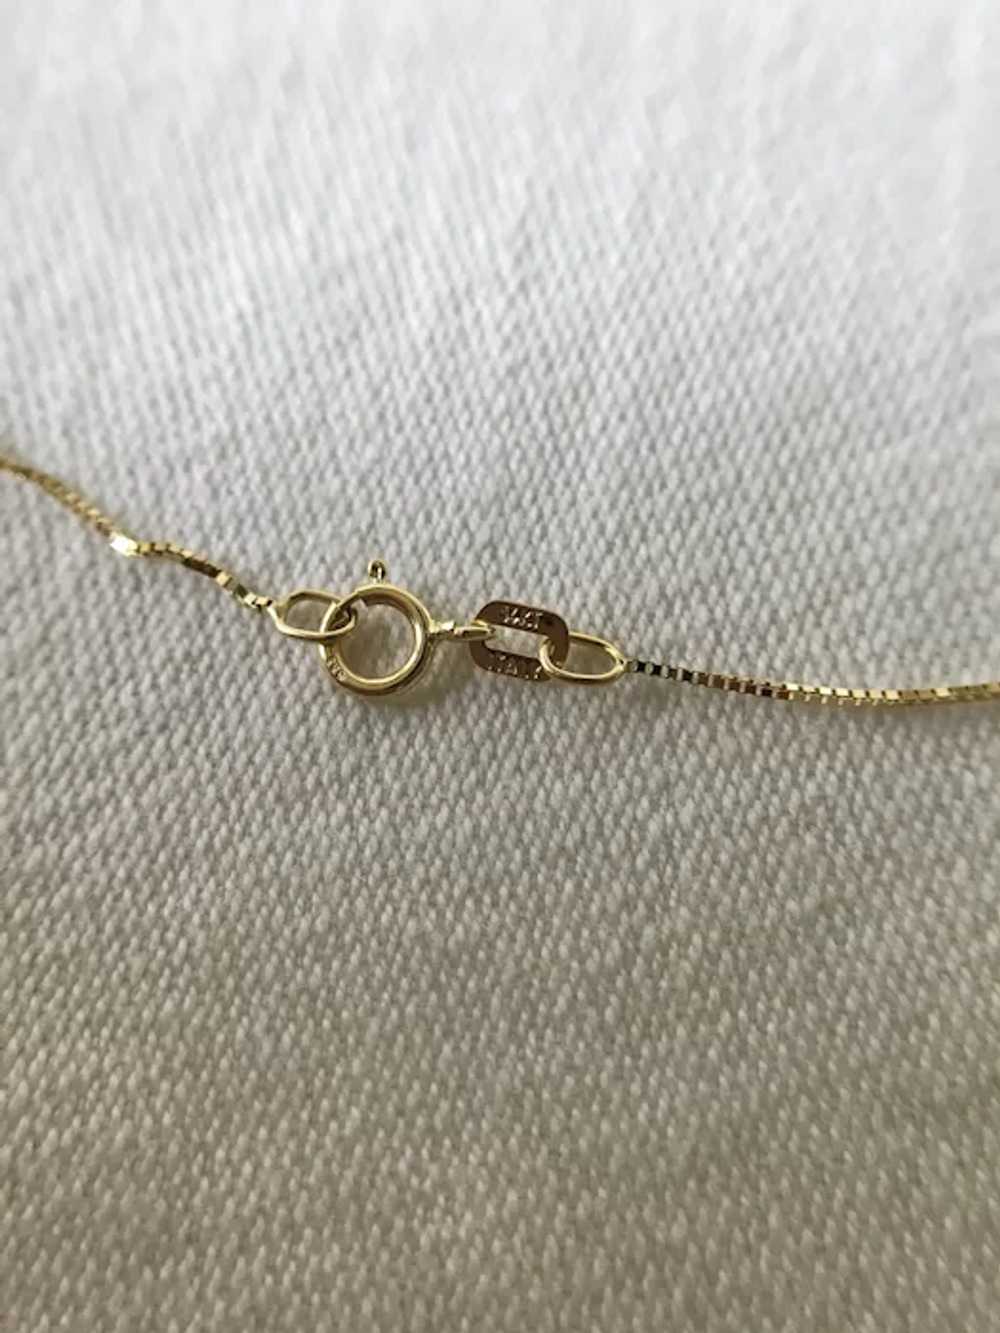 Etched 14K Gold Heart Pendant Necklace - image 8